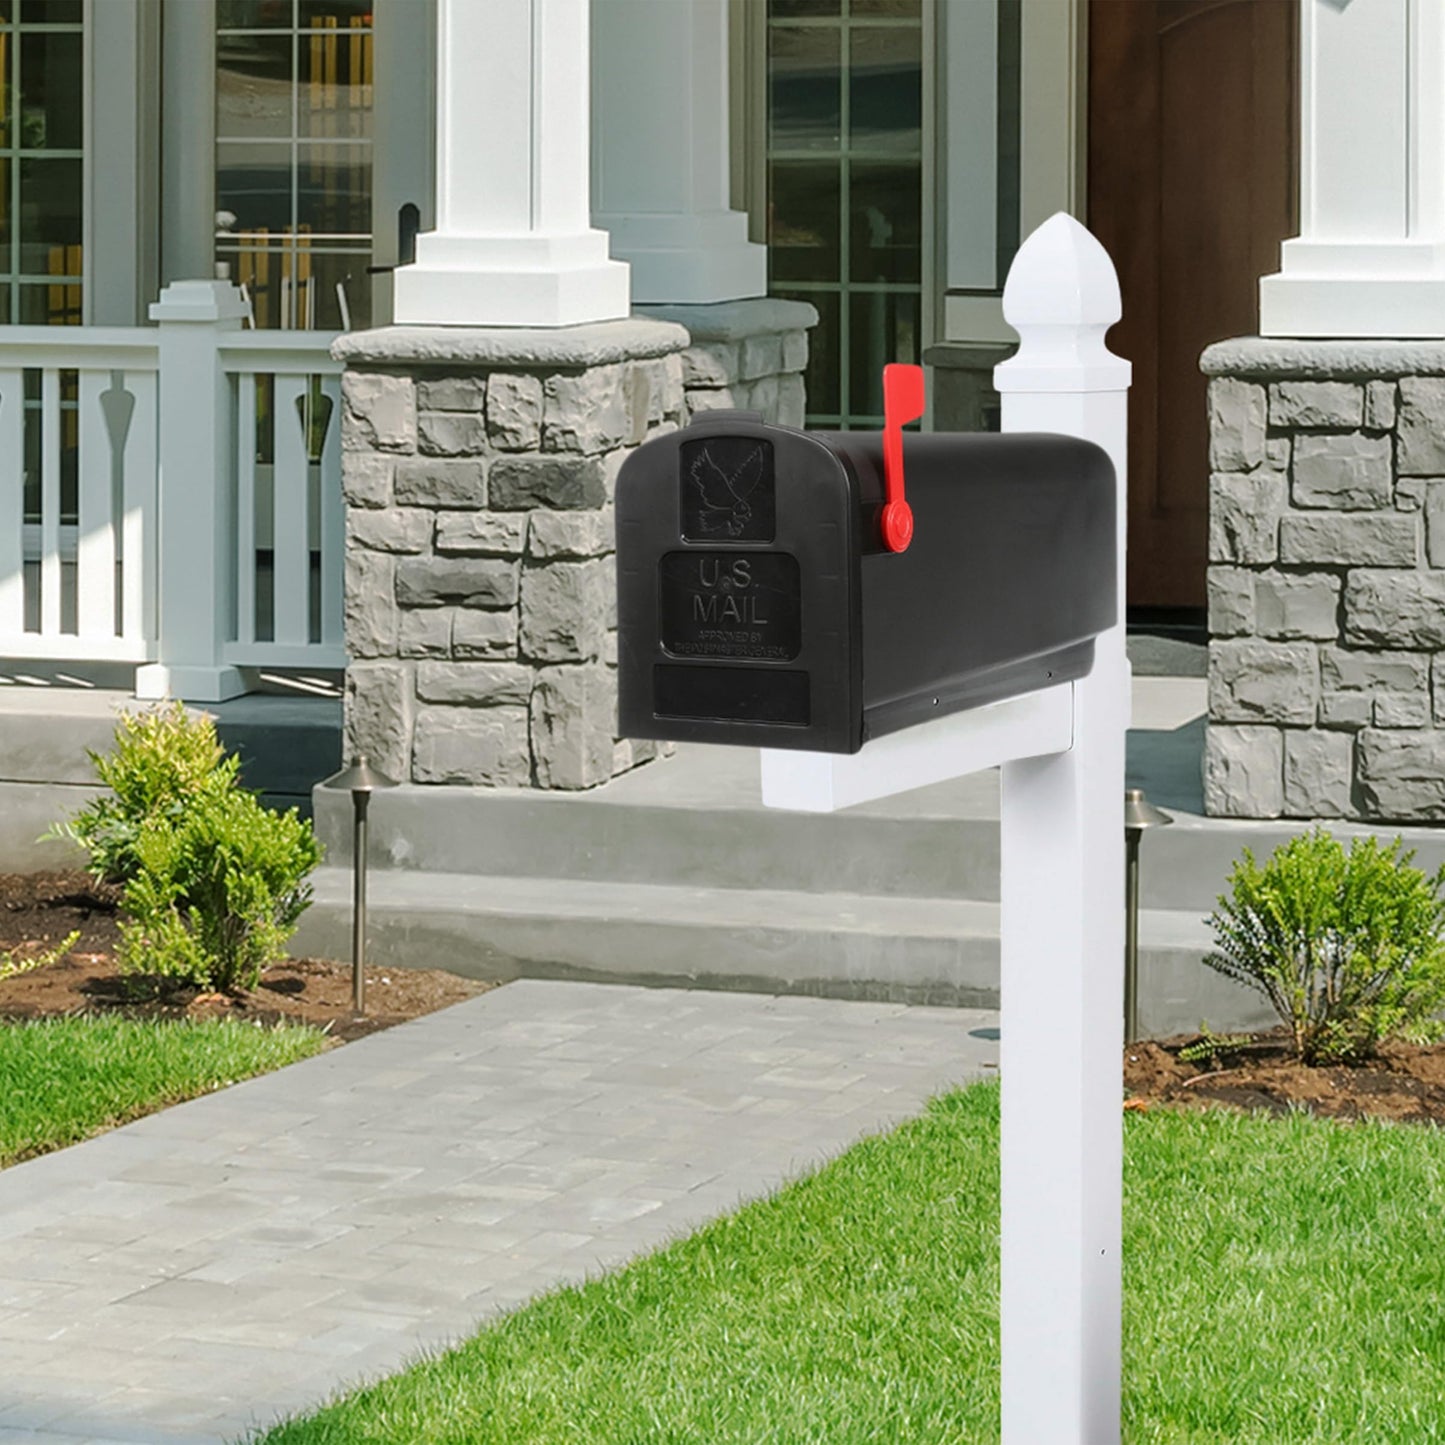 Architectural Mailboxes Parsons Medium Capacity, Plastic Post Mount Mailbox, Black